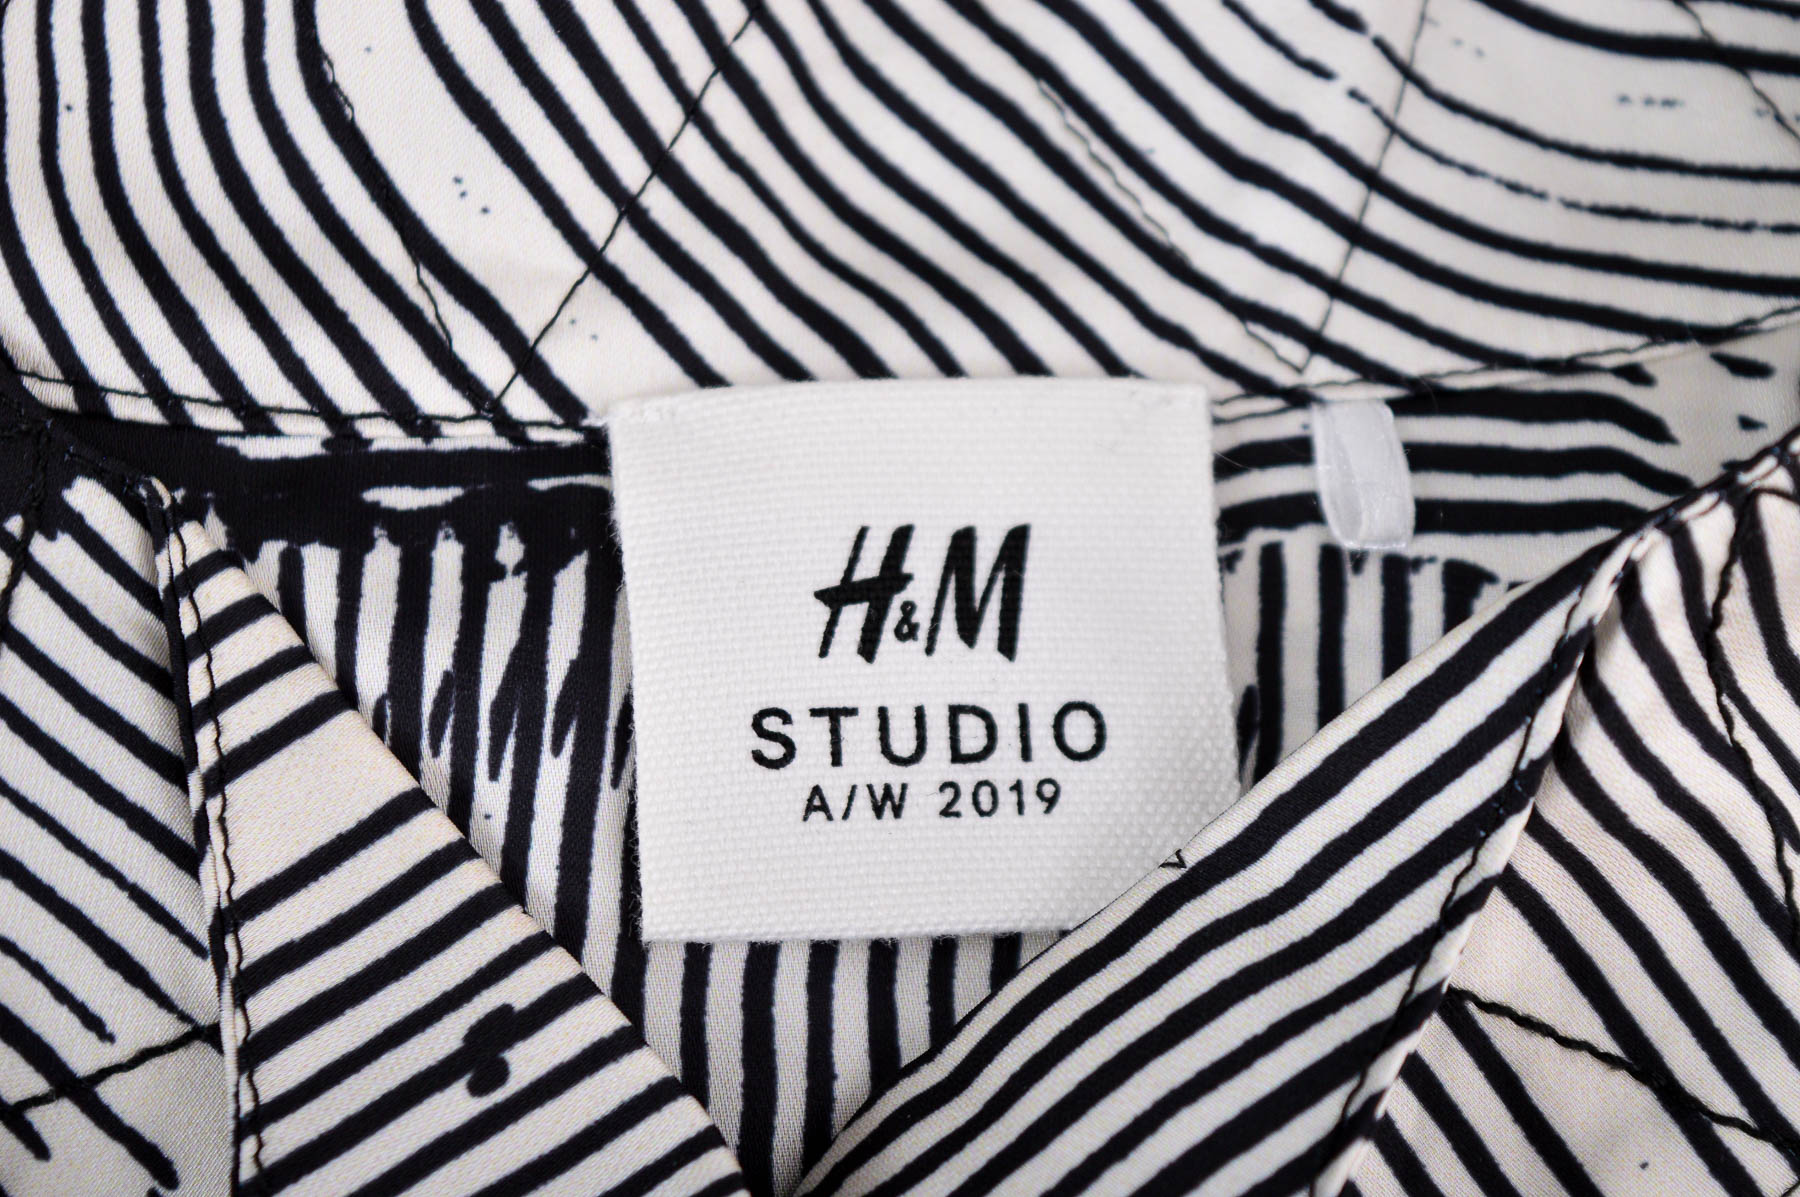 Dress - H&M STUDIO A/W 2017 - 2